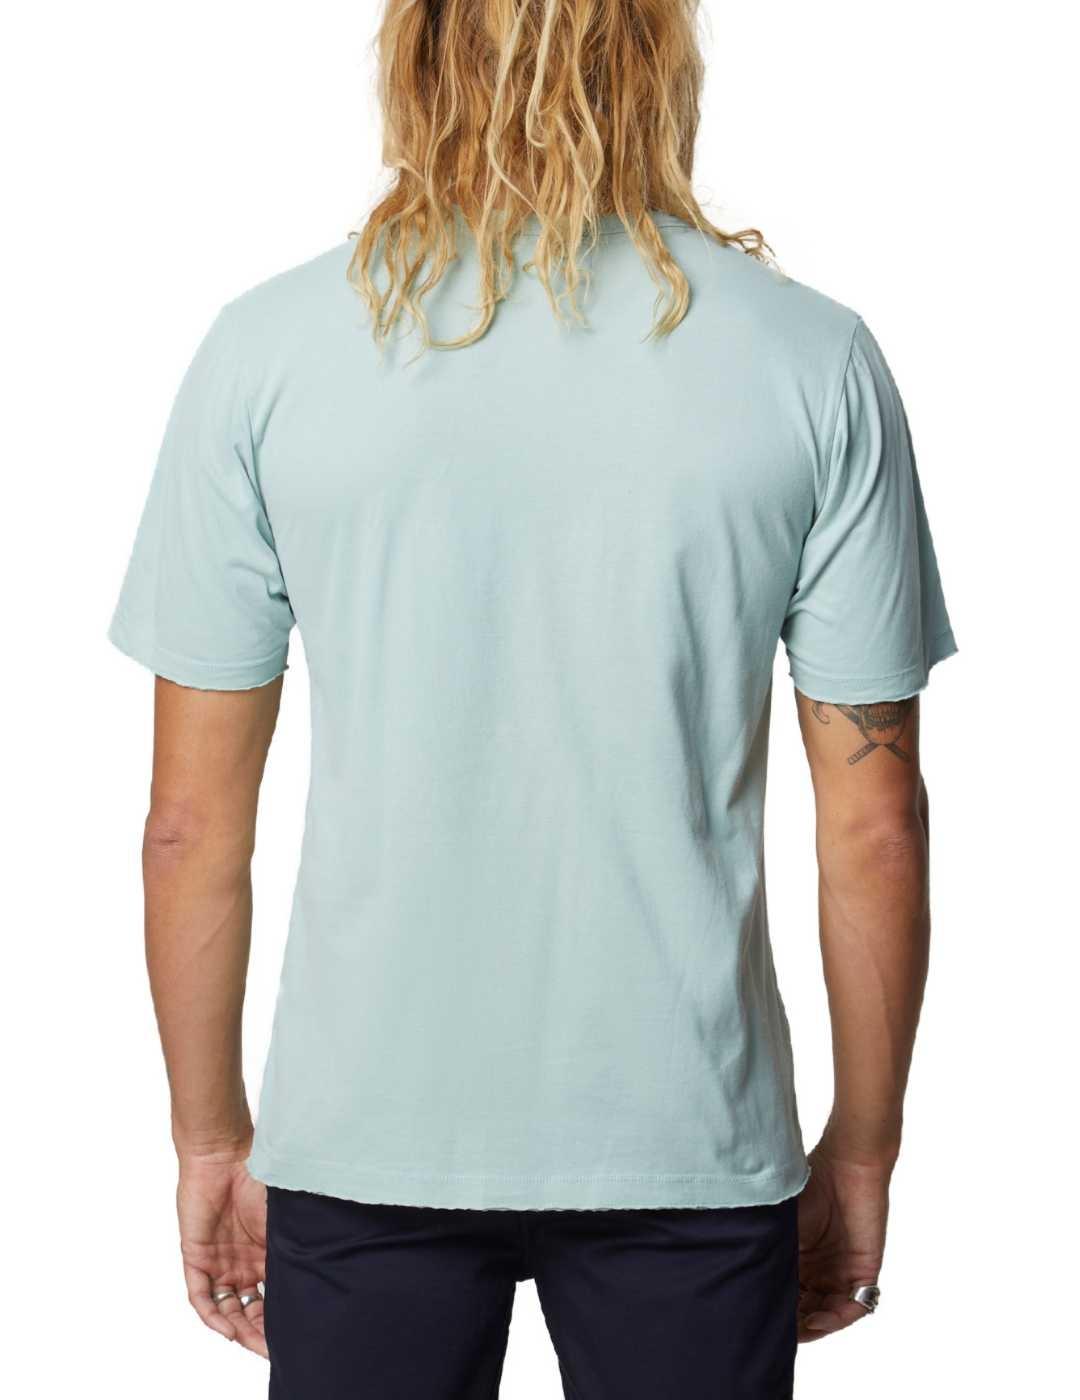 Camiseta Altona verde logo azul marino manga corta de hombre